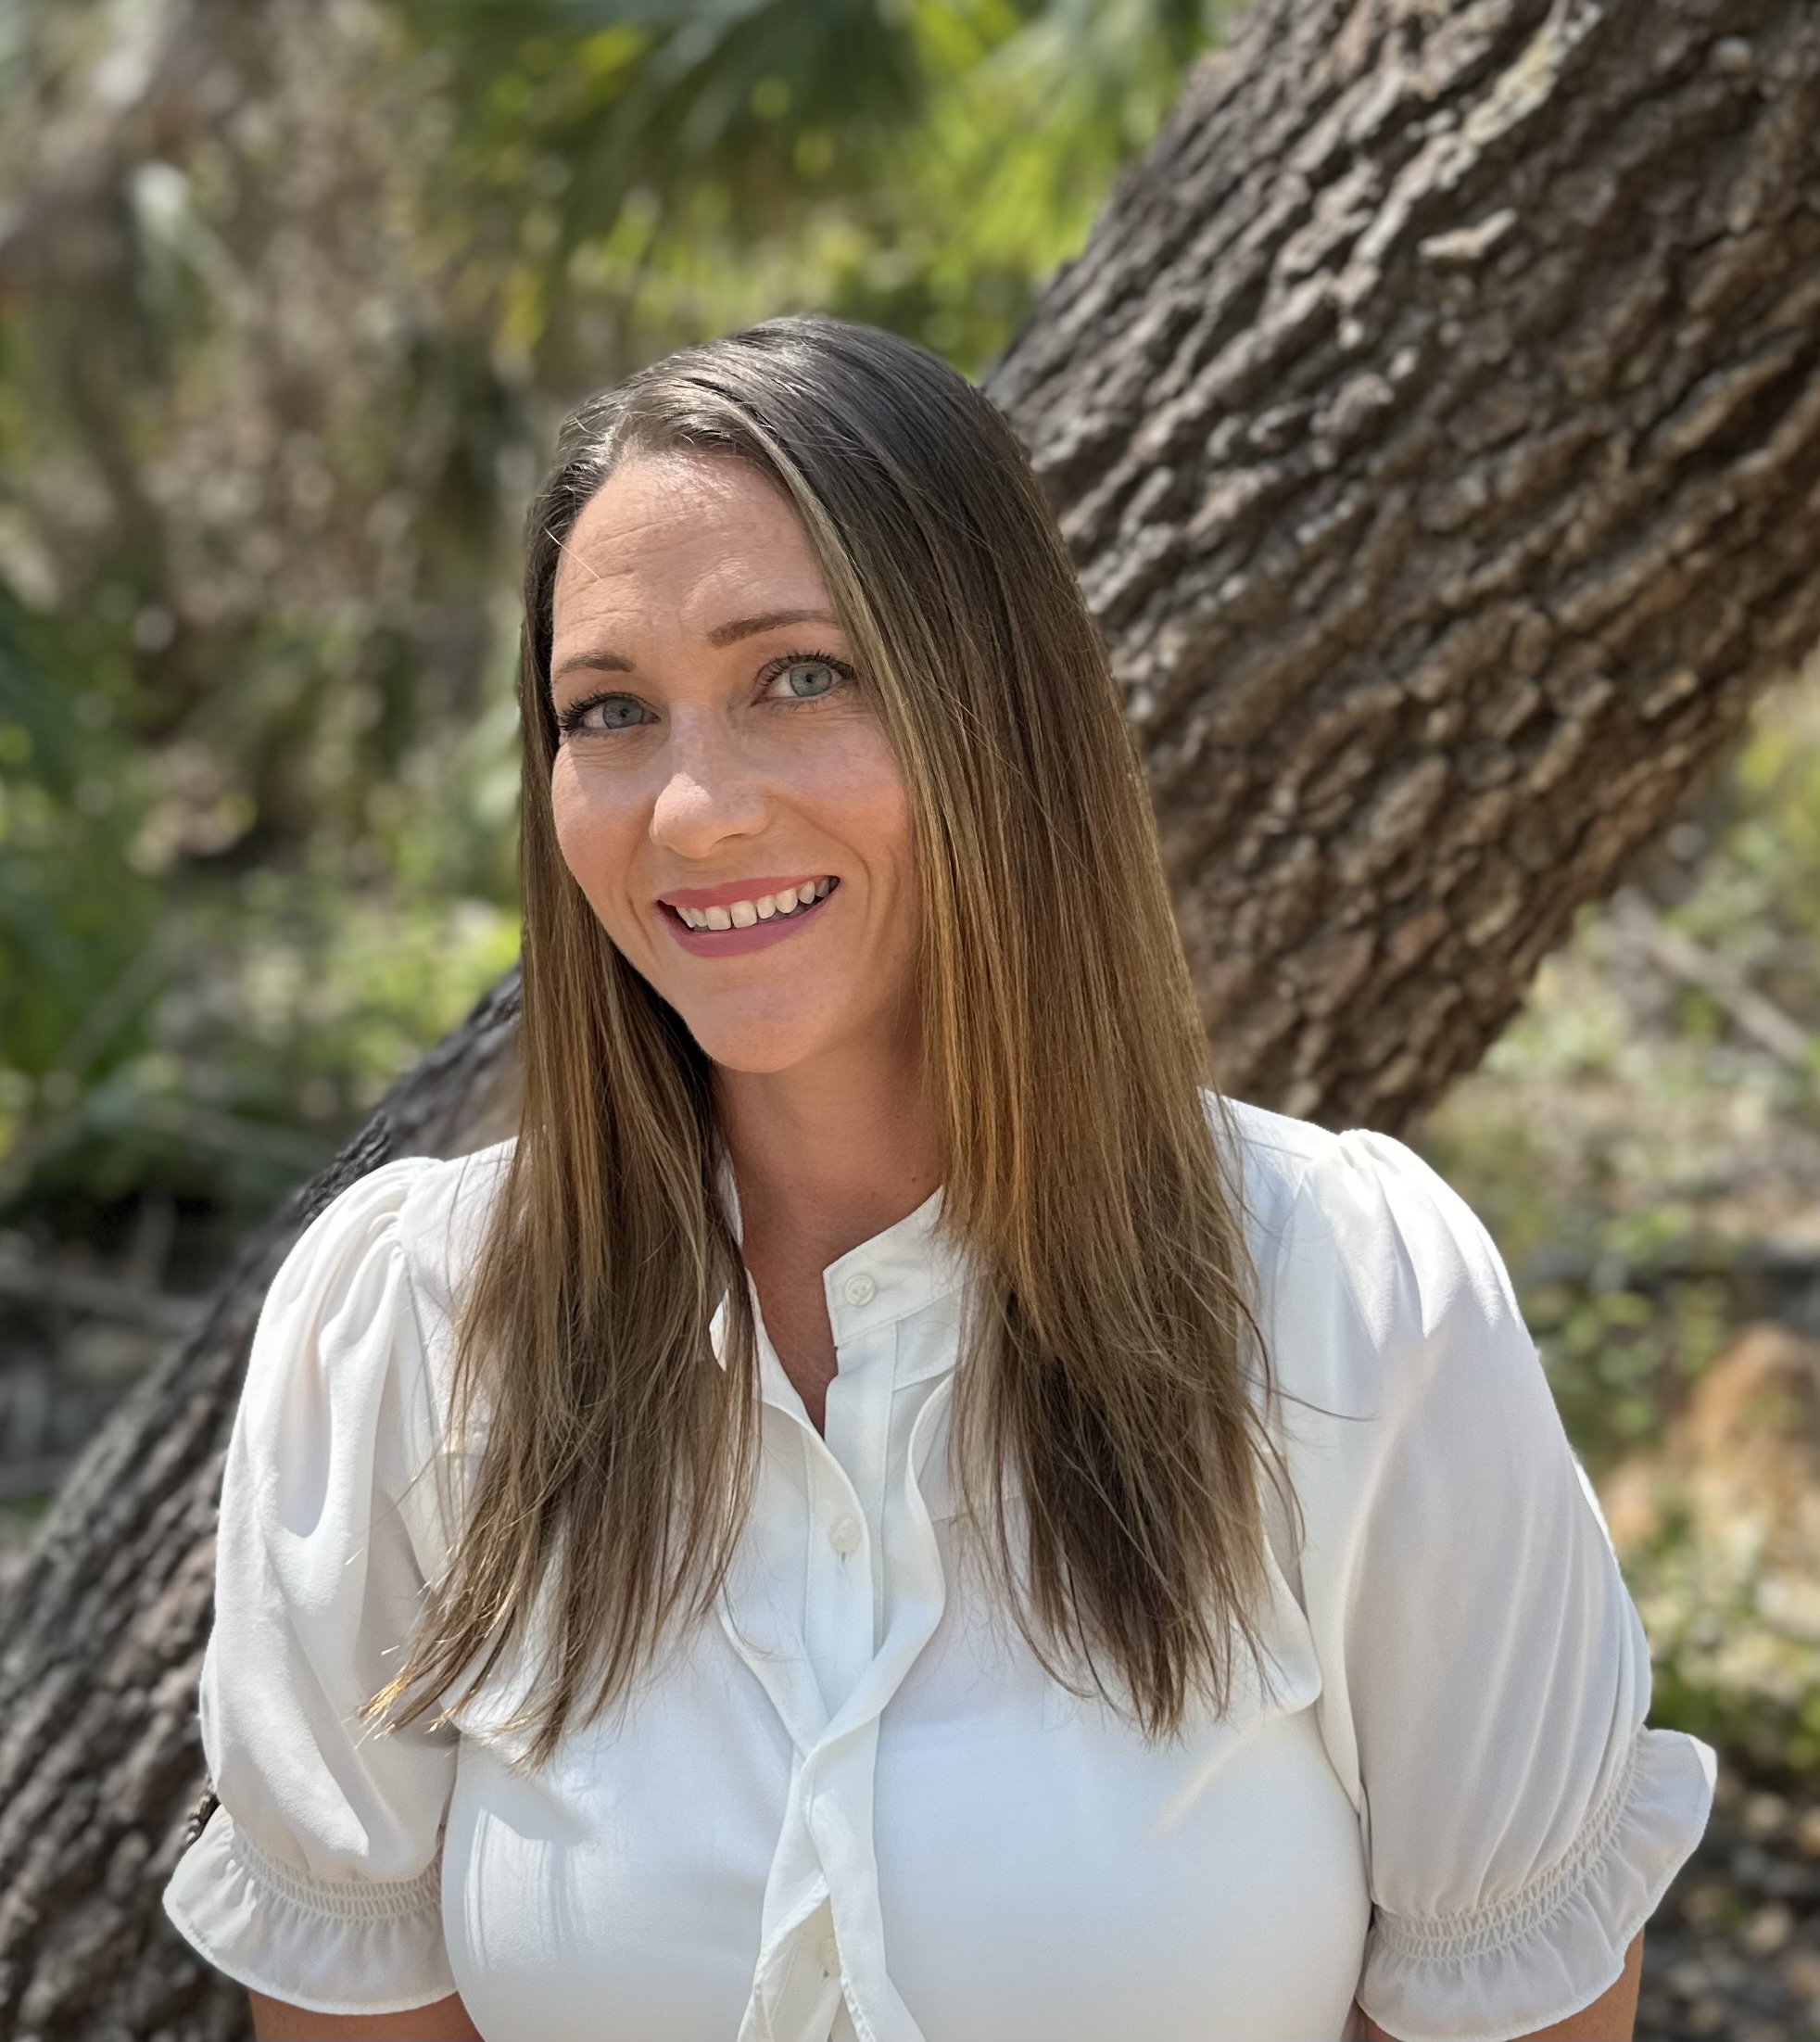 Amanda Burns Sarasota Addiction Professional. Bradenton Florida Addiction Counselor working at SAS providing IOP, DNT, and PHP treatment options